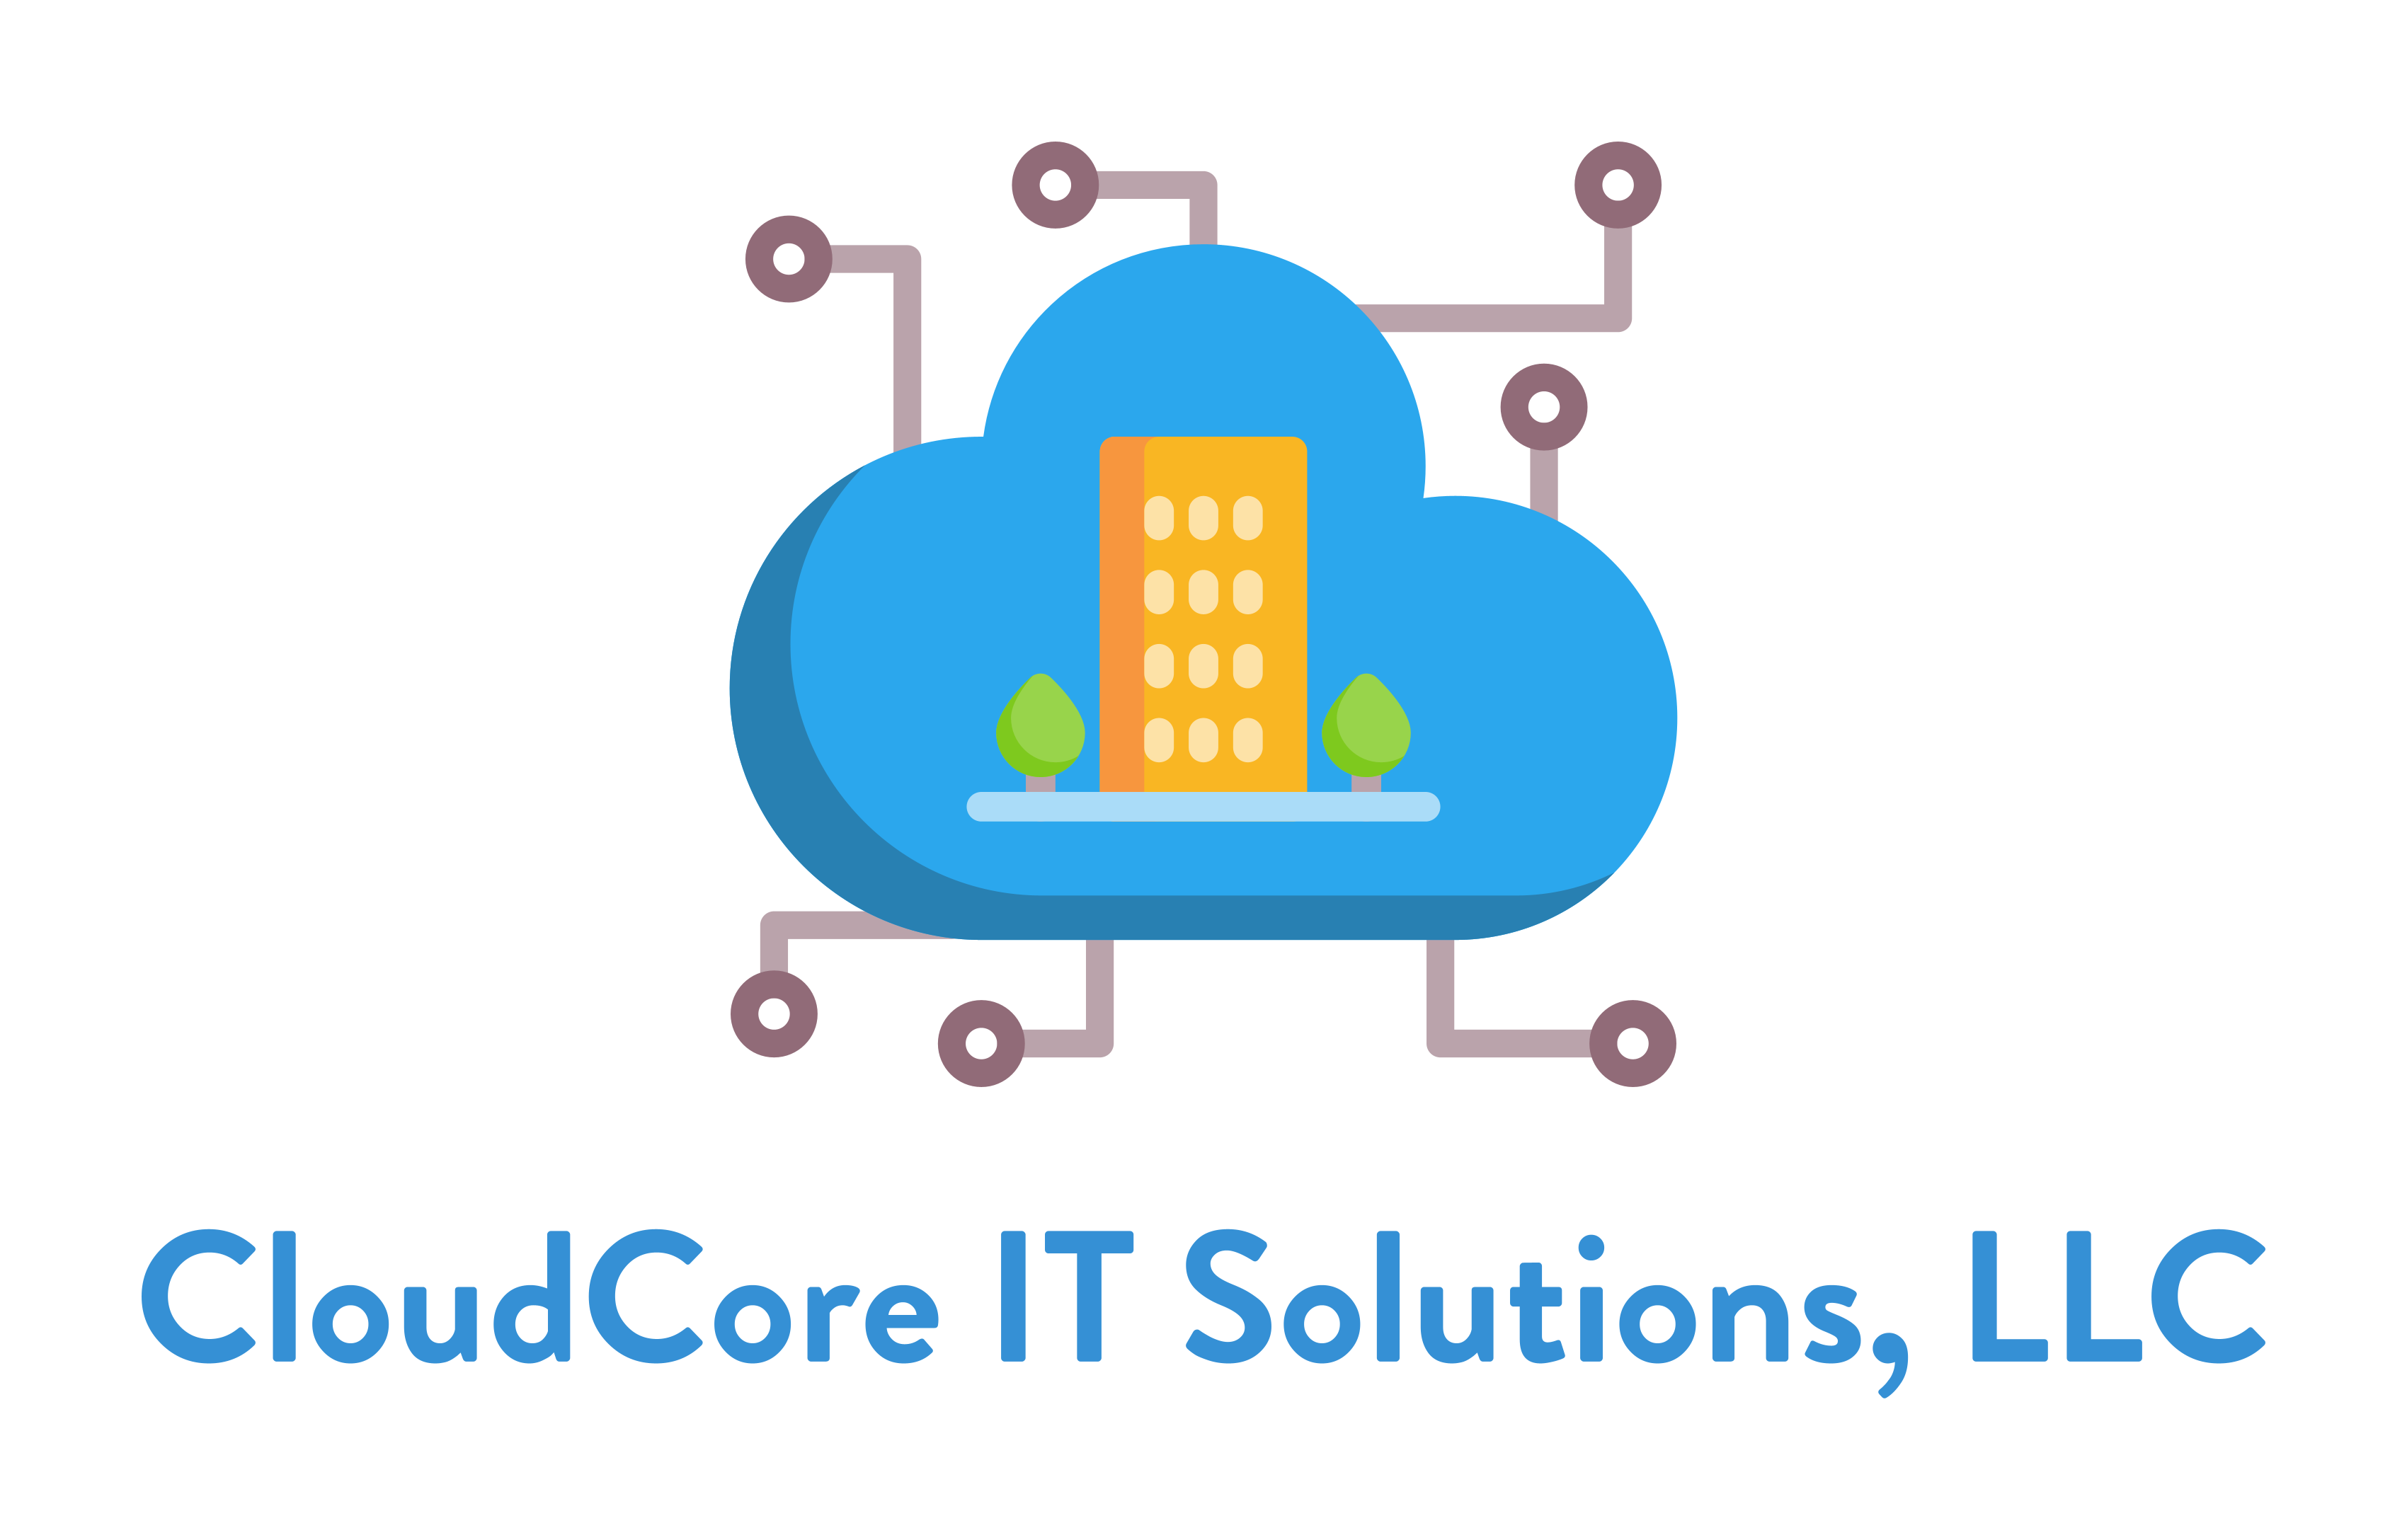 CloudCore IT Solutions, LLC